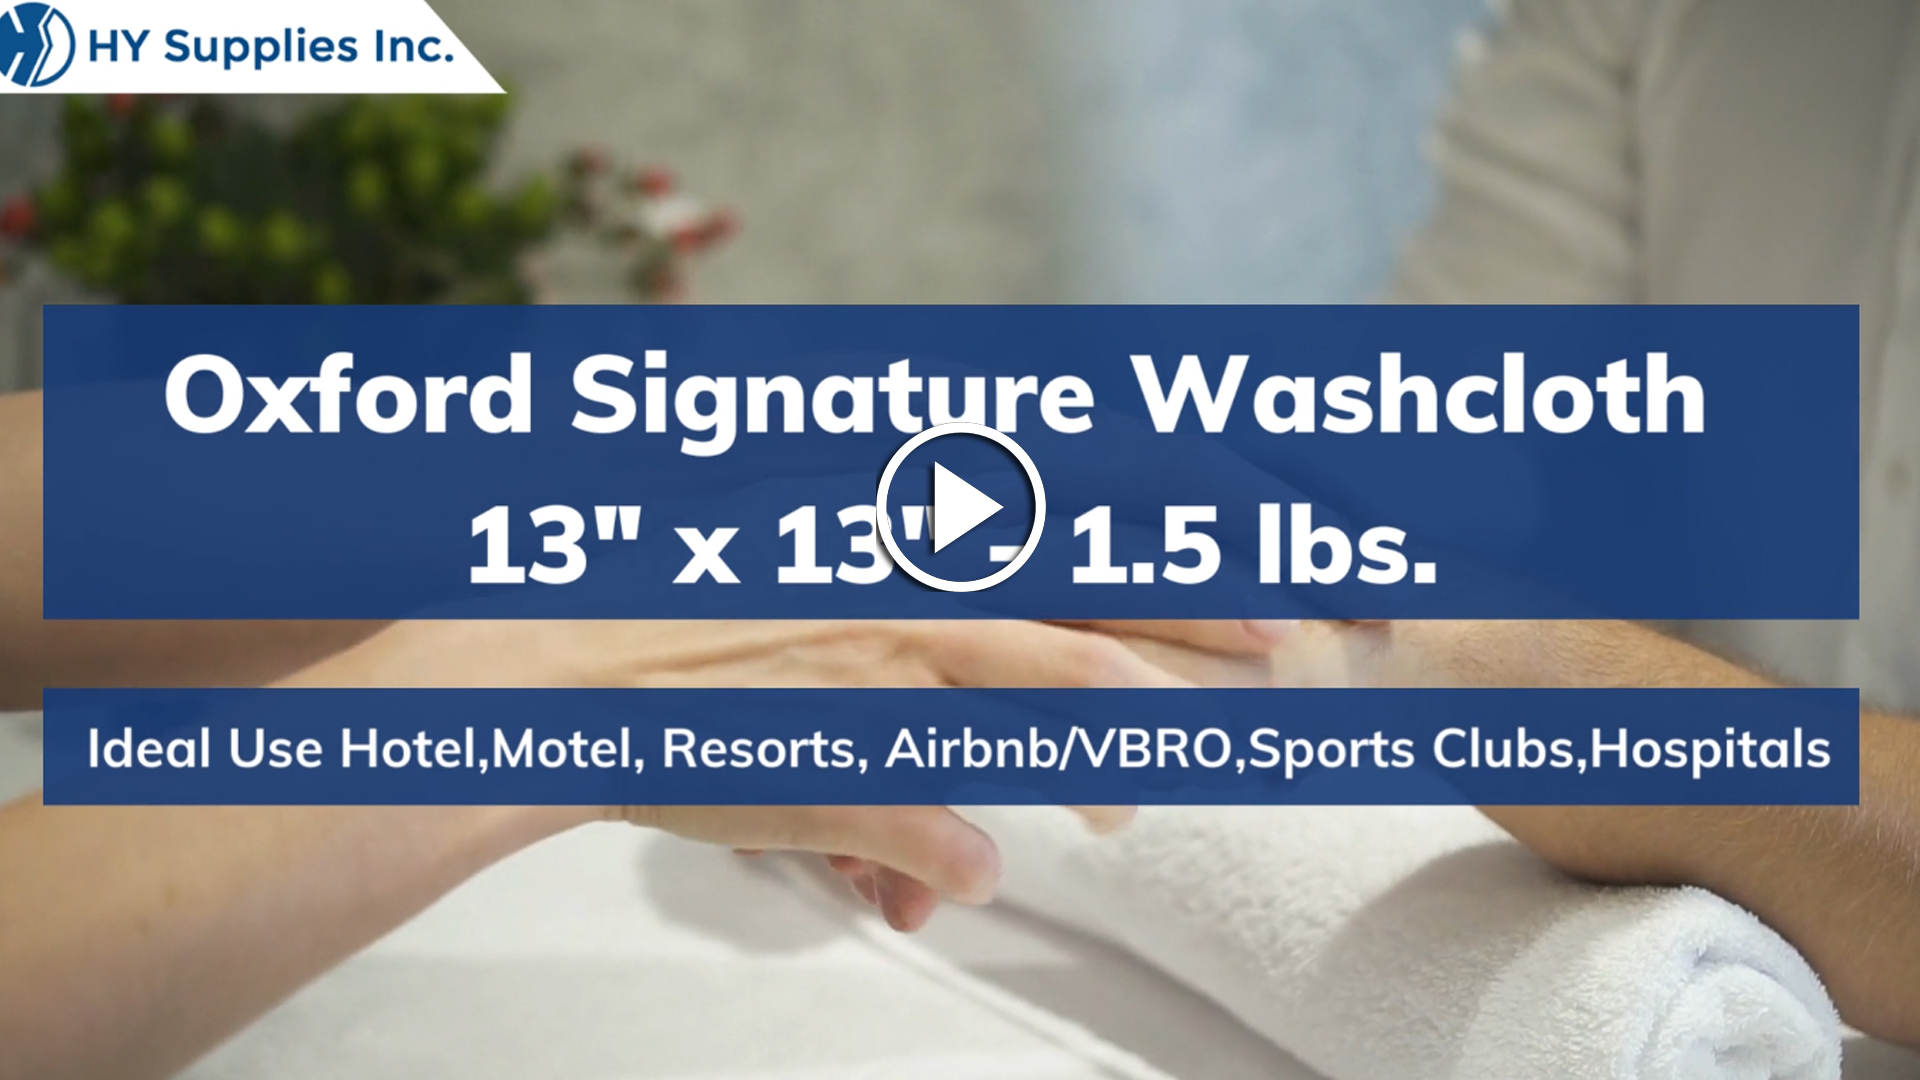 Oxford Signature Washcloth - 13" x 13" - 1.5 lbs.